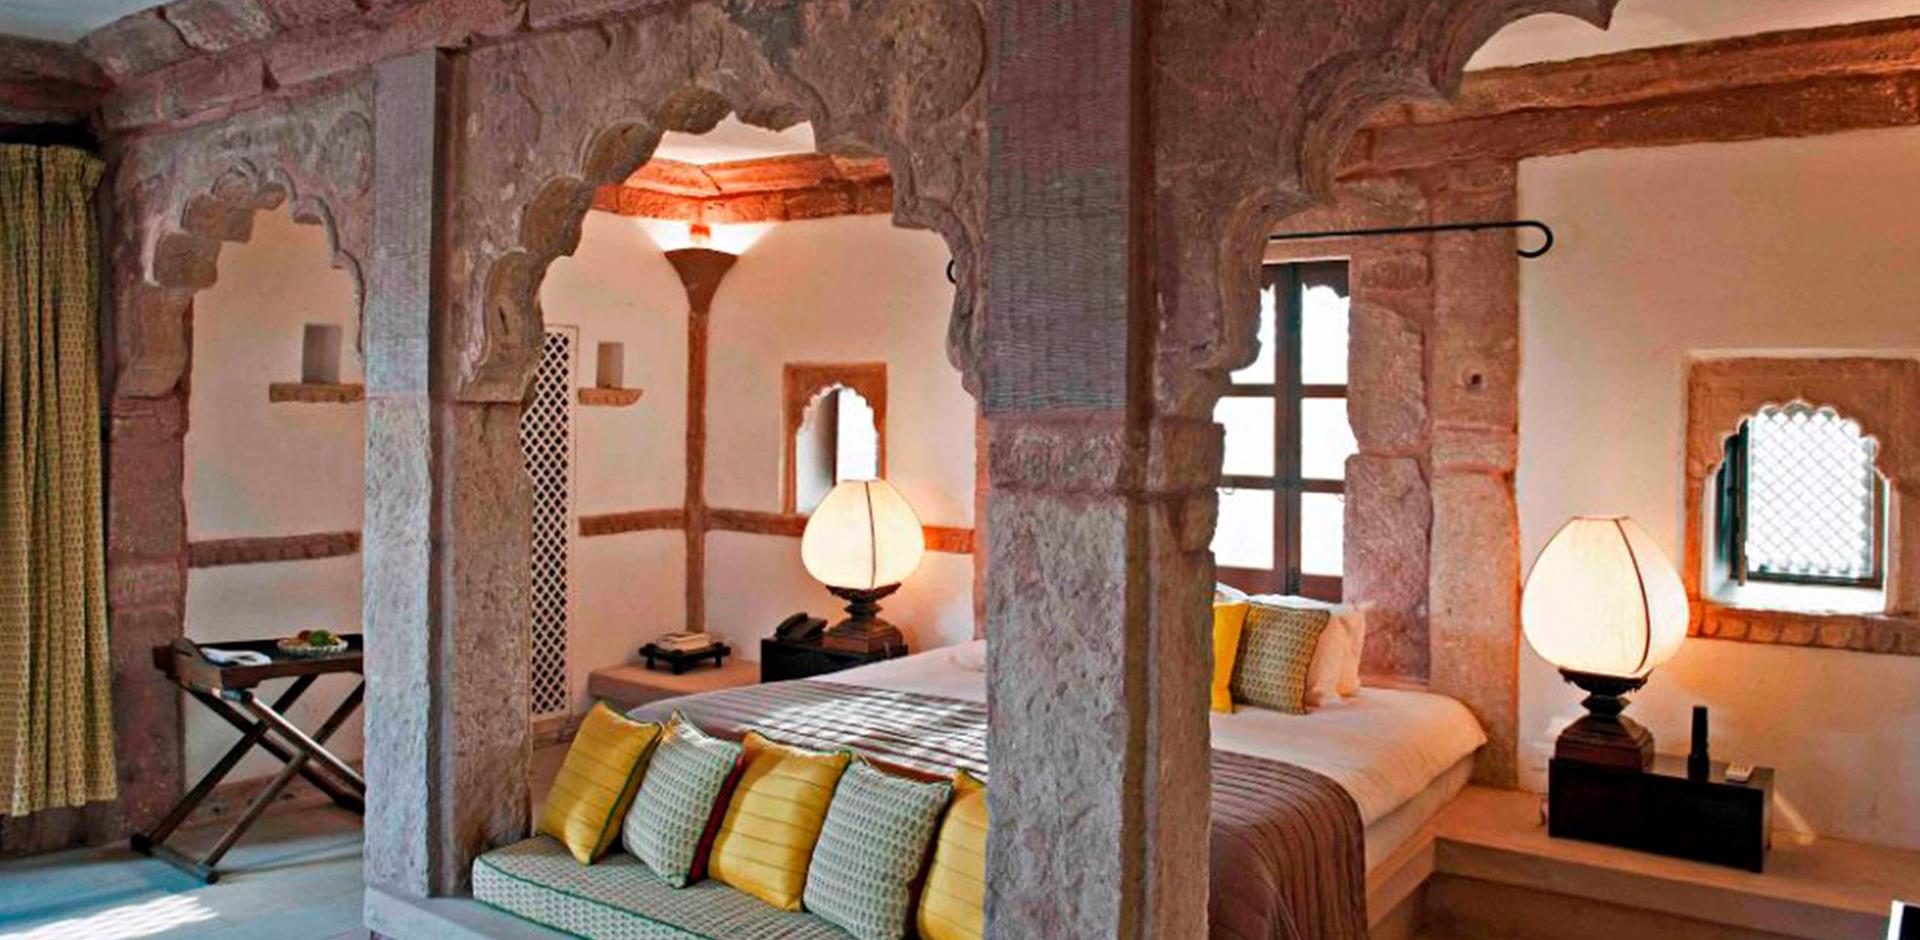 Bedroom, Ranvas, Nagaur, India